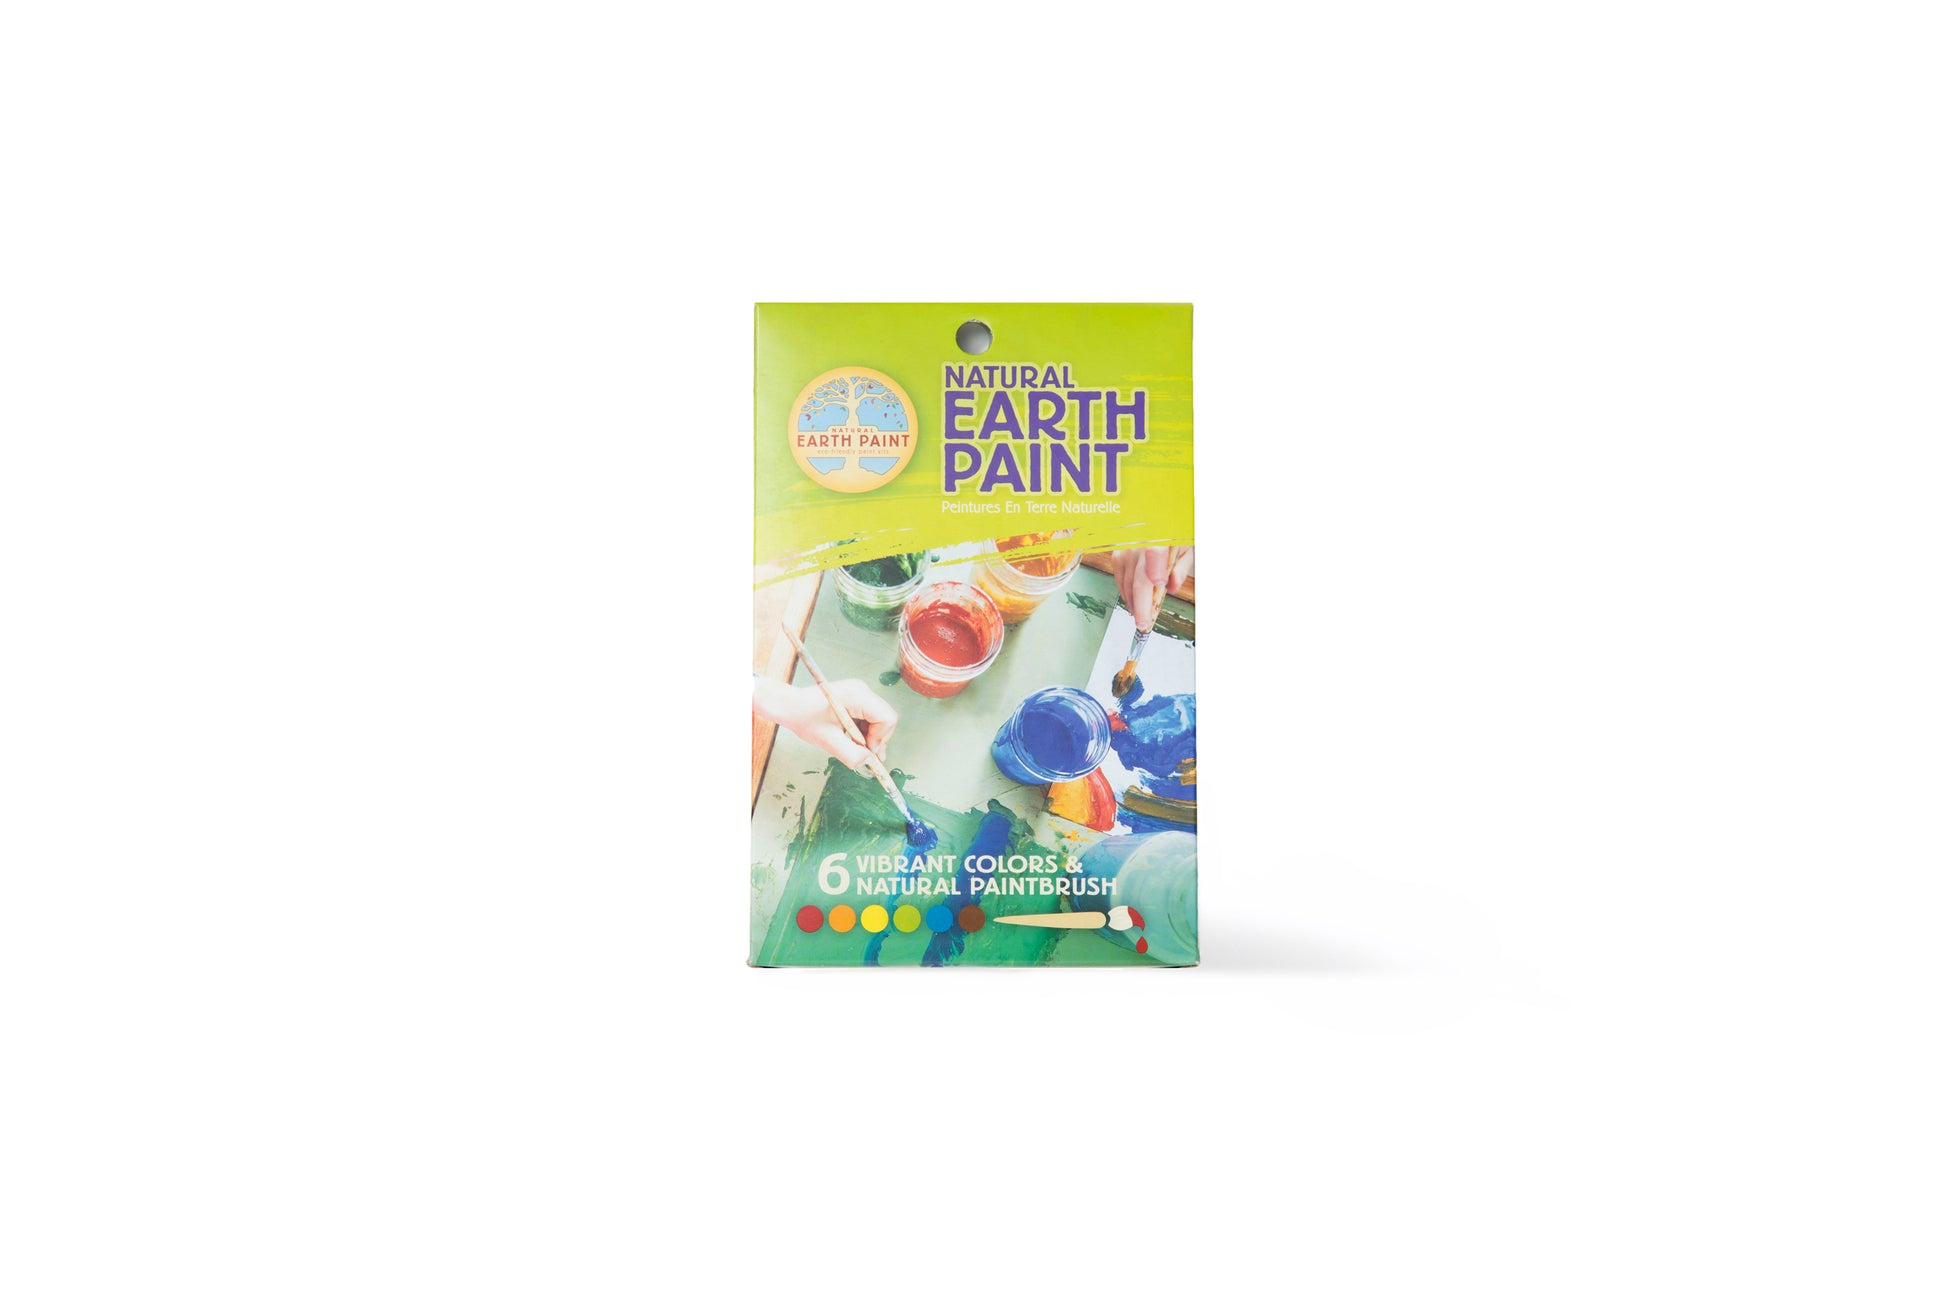 Petite Natural Earth Paint Kit - Natural Earth Paint